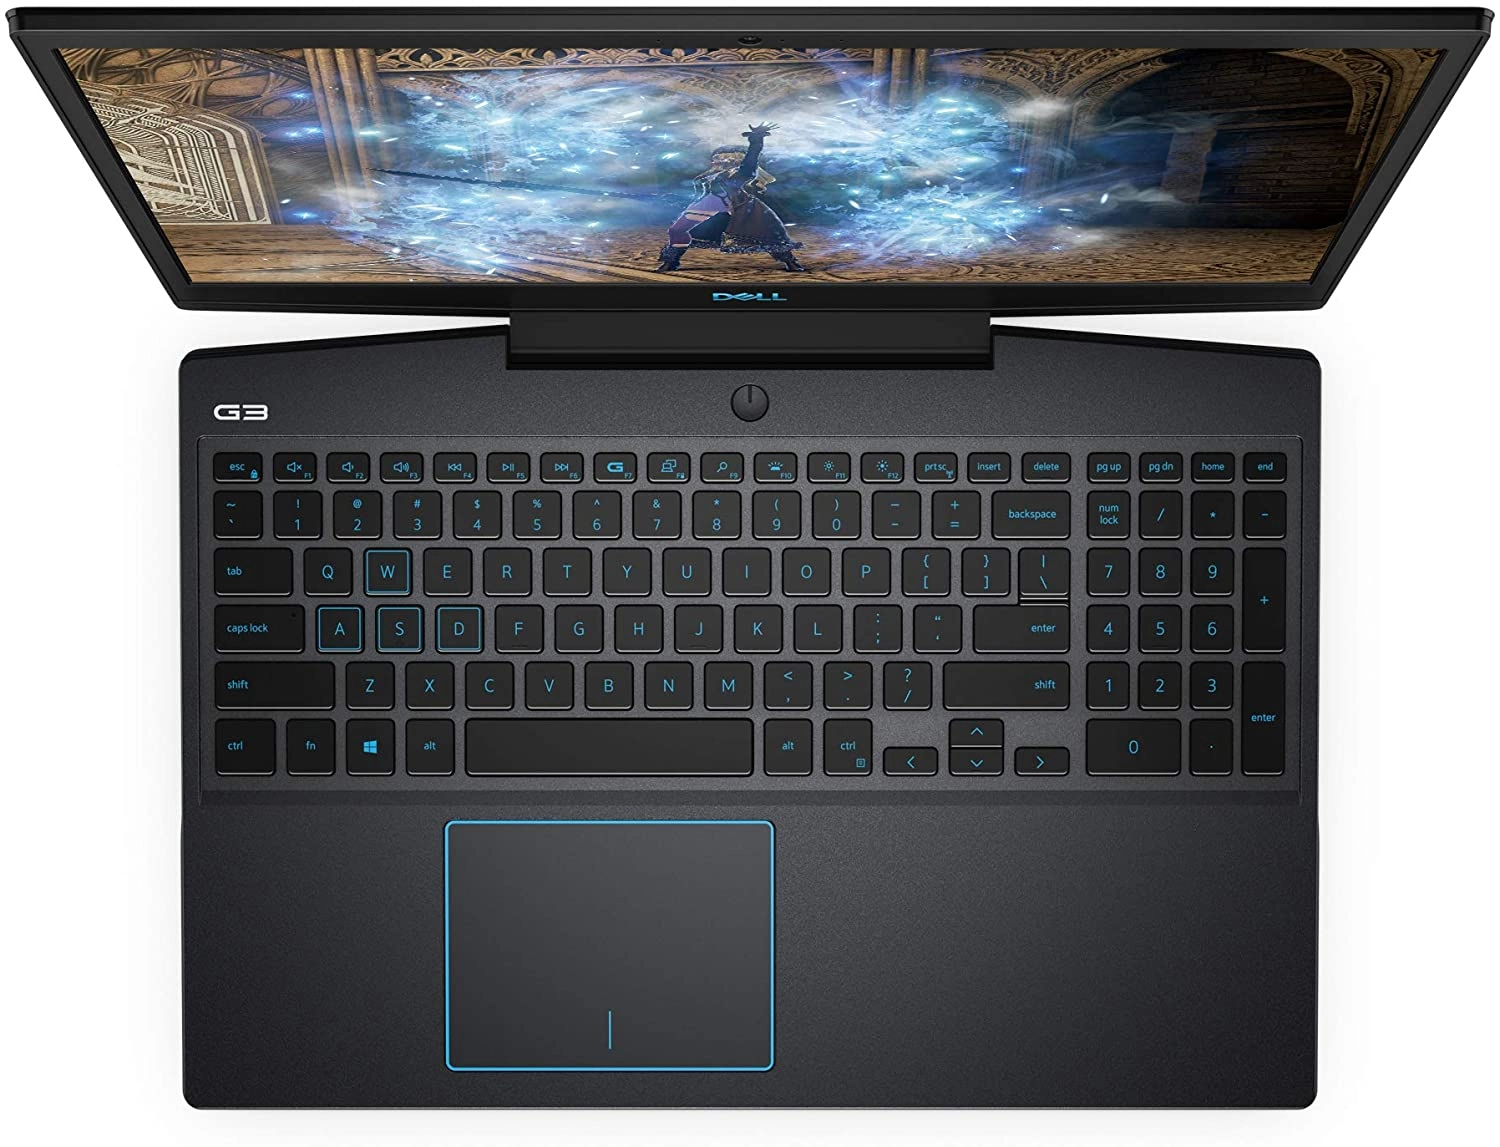 Dell Marketing laptop image